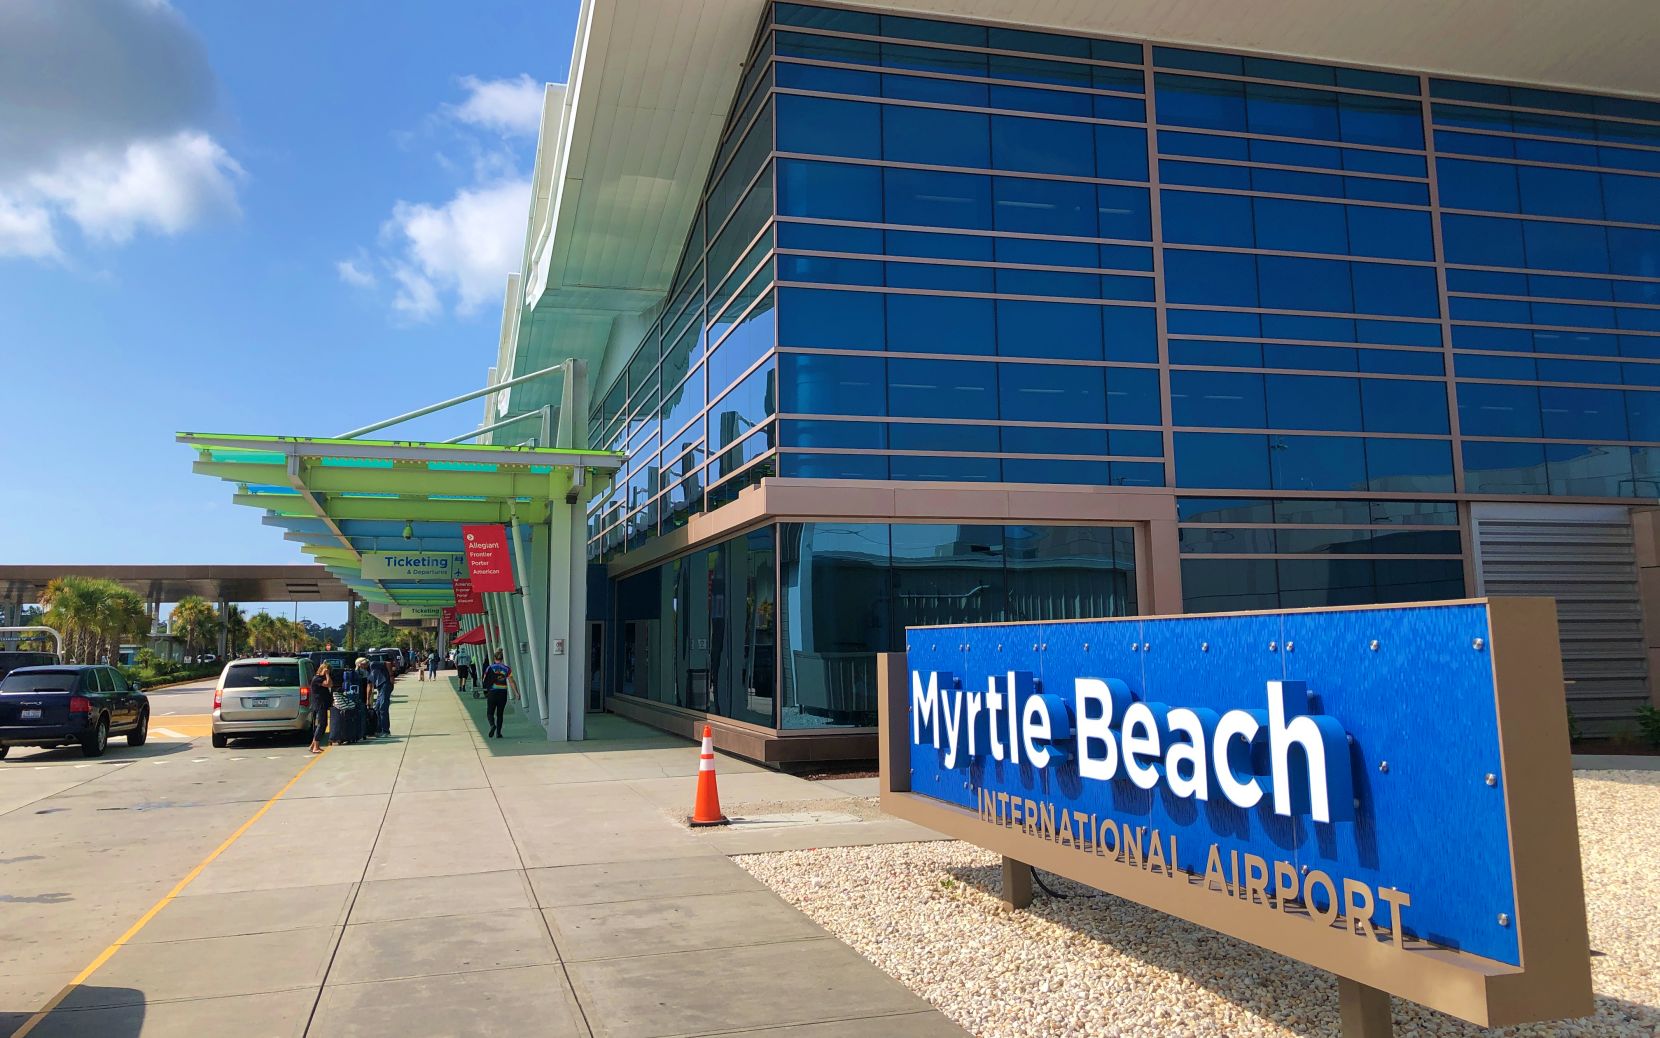 Myrtle Beach International Airport sign and departures loop.